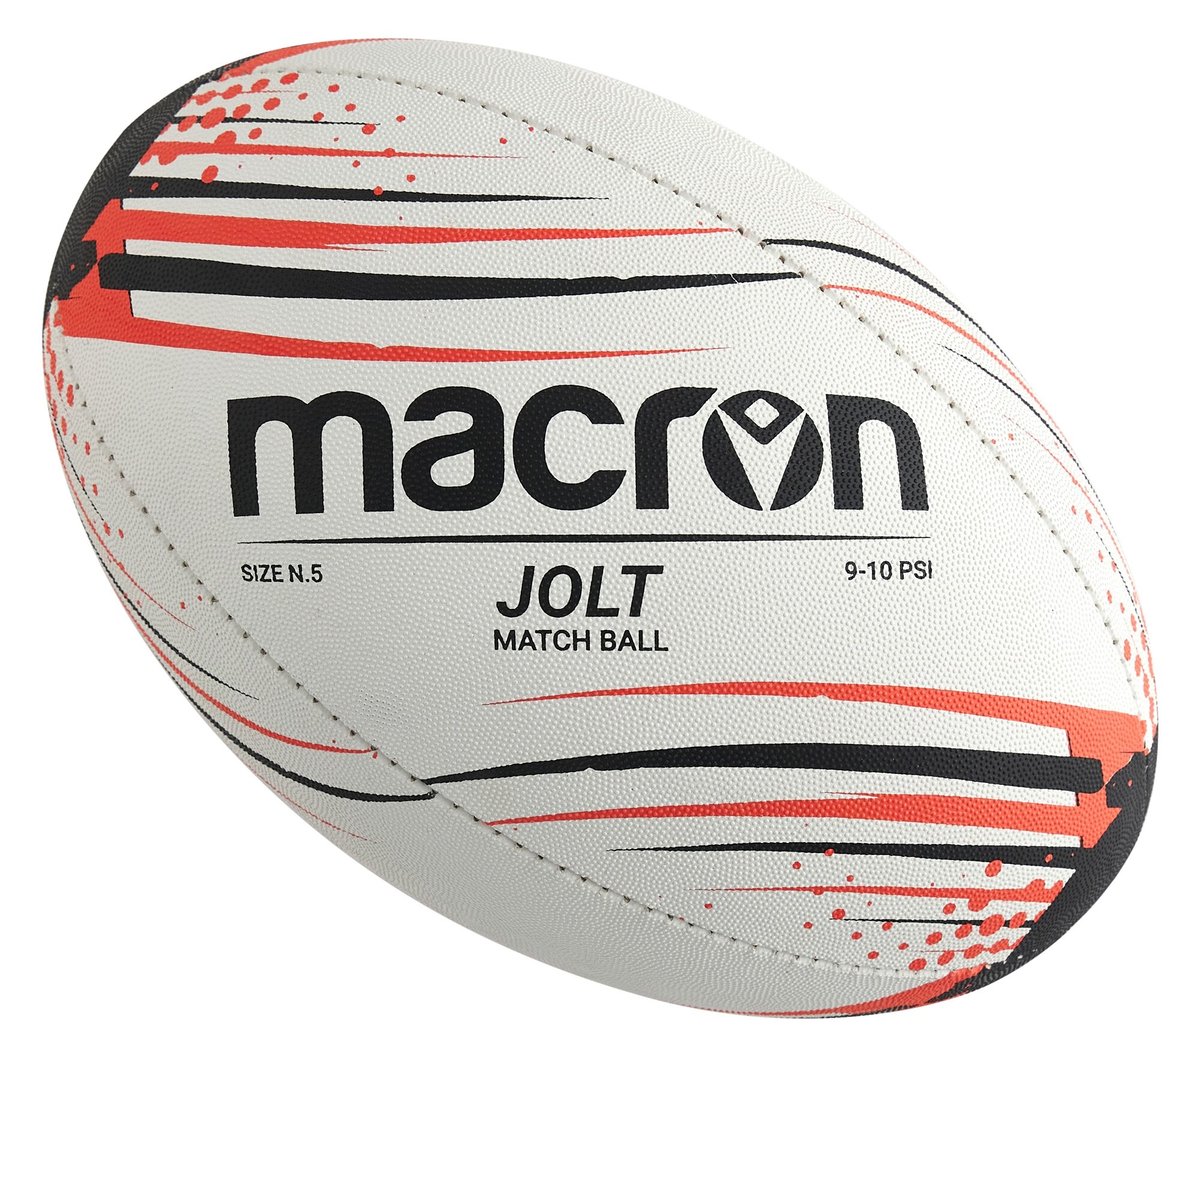 Macron Jolt N.5 Match Ball